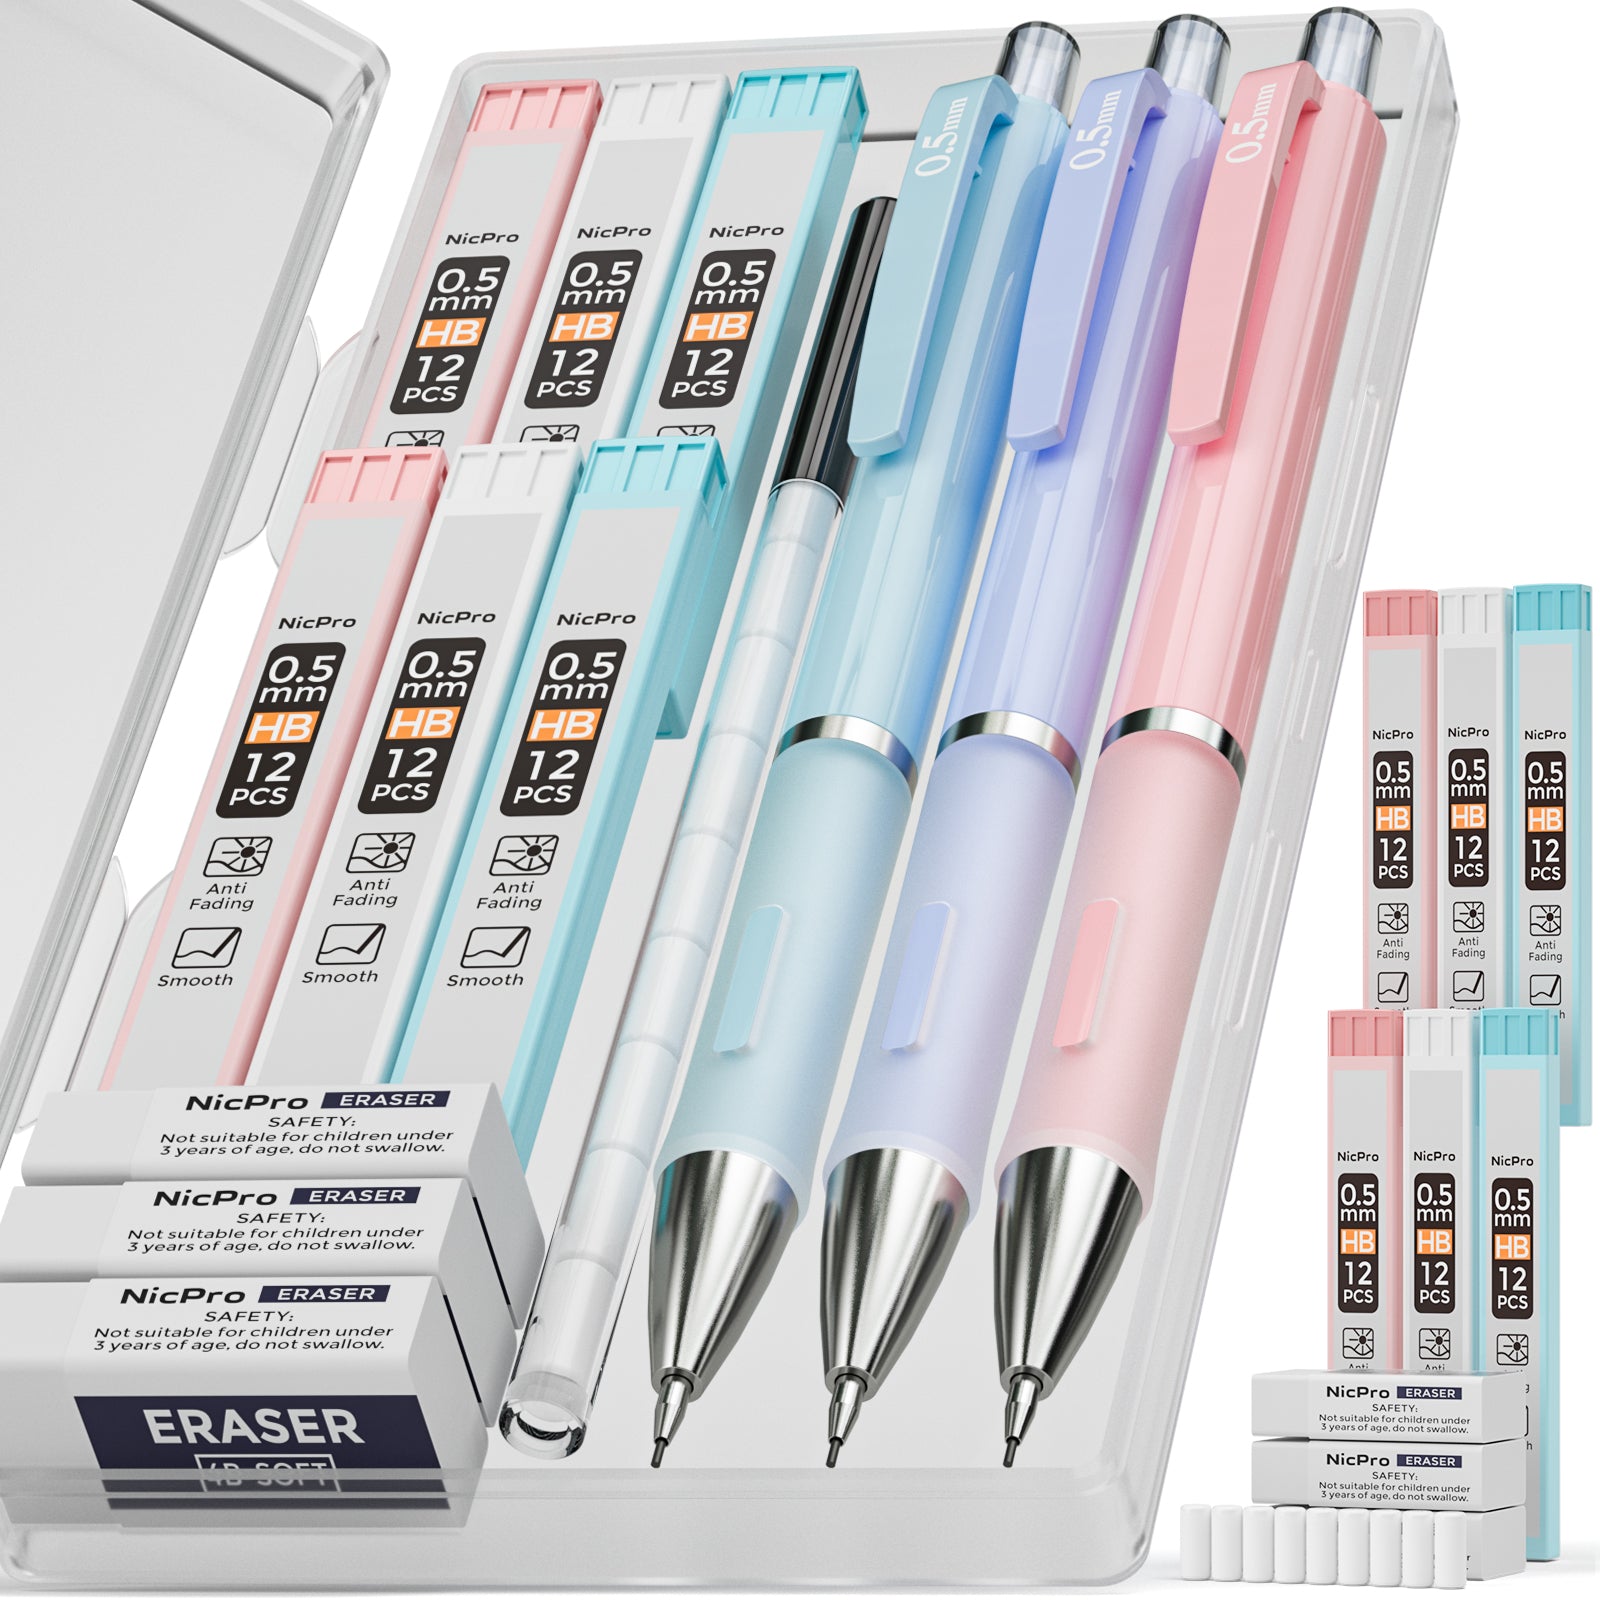 Nicpro Mechanical Pencils Set, 3PCS Mechanical Pencil 0.5 with 3 Tubes HB  Lead Pencil 0.5mm,1 PCS Eraser & 9 PCS Eraser Refill, White Drafting Pencil